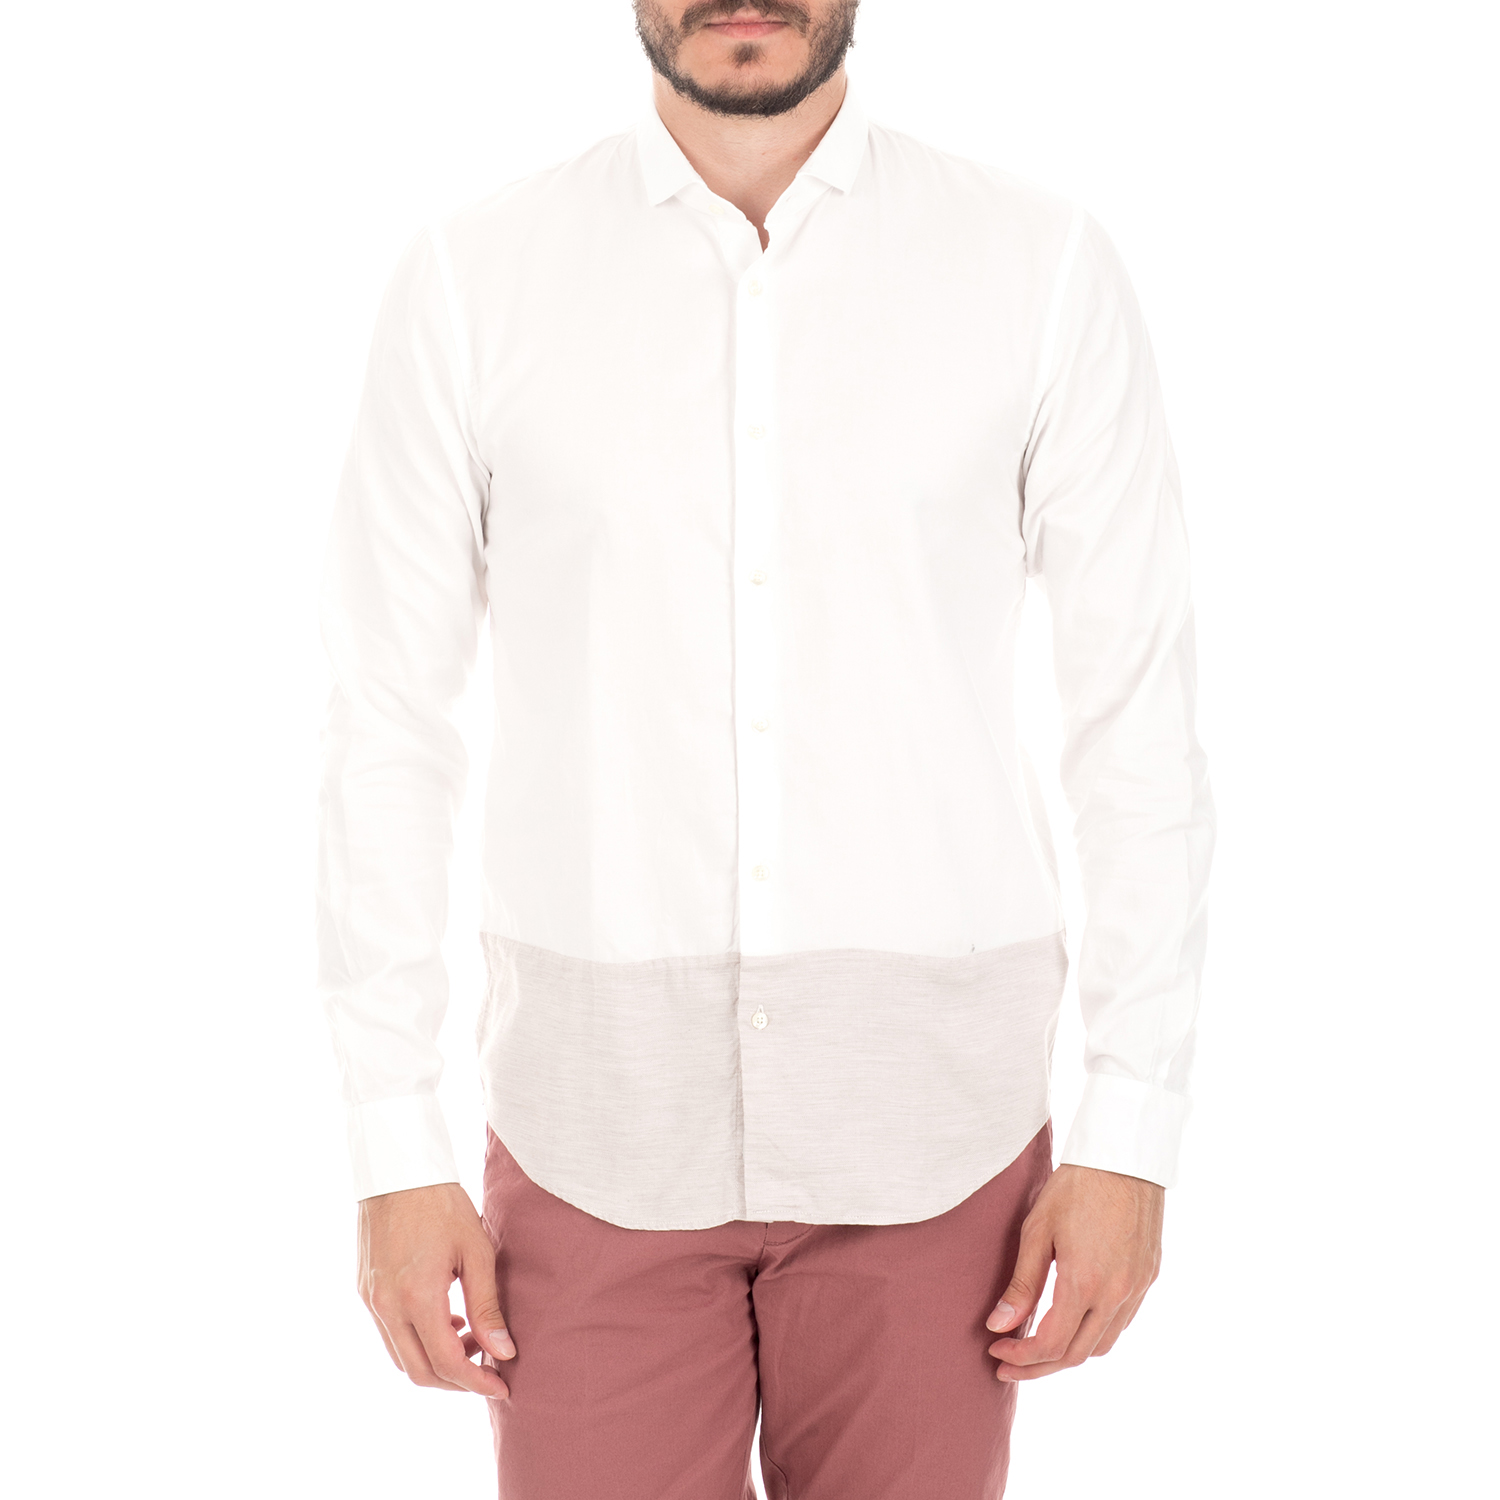 SCOTCH & SODA - Ανδρικό πουκάμισο SCOTCH & SODA λευκό Ανδρικά/Ρούχα/Πουκάμισα/Μακρυμάνικα